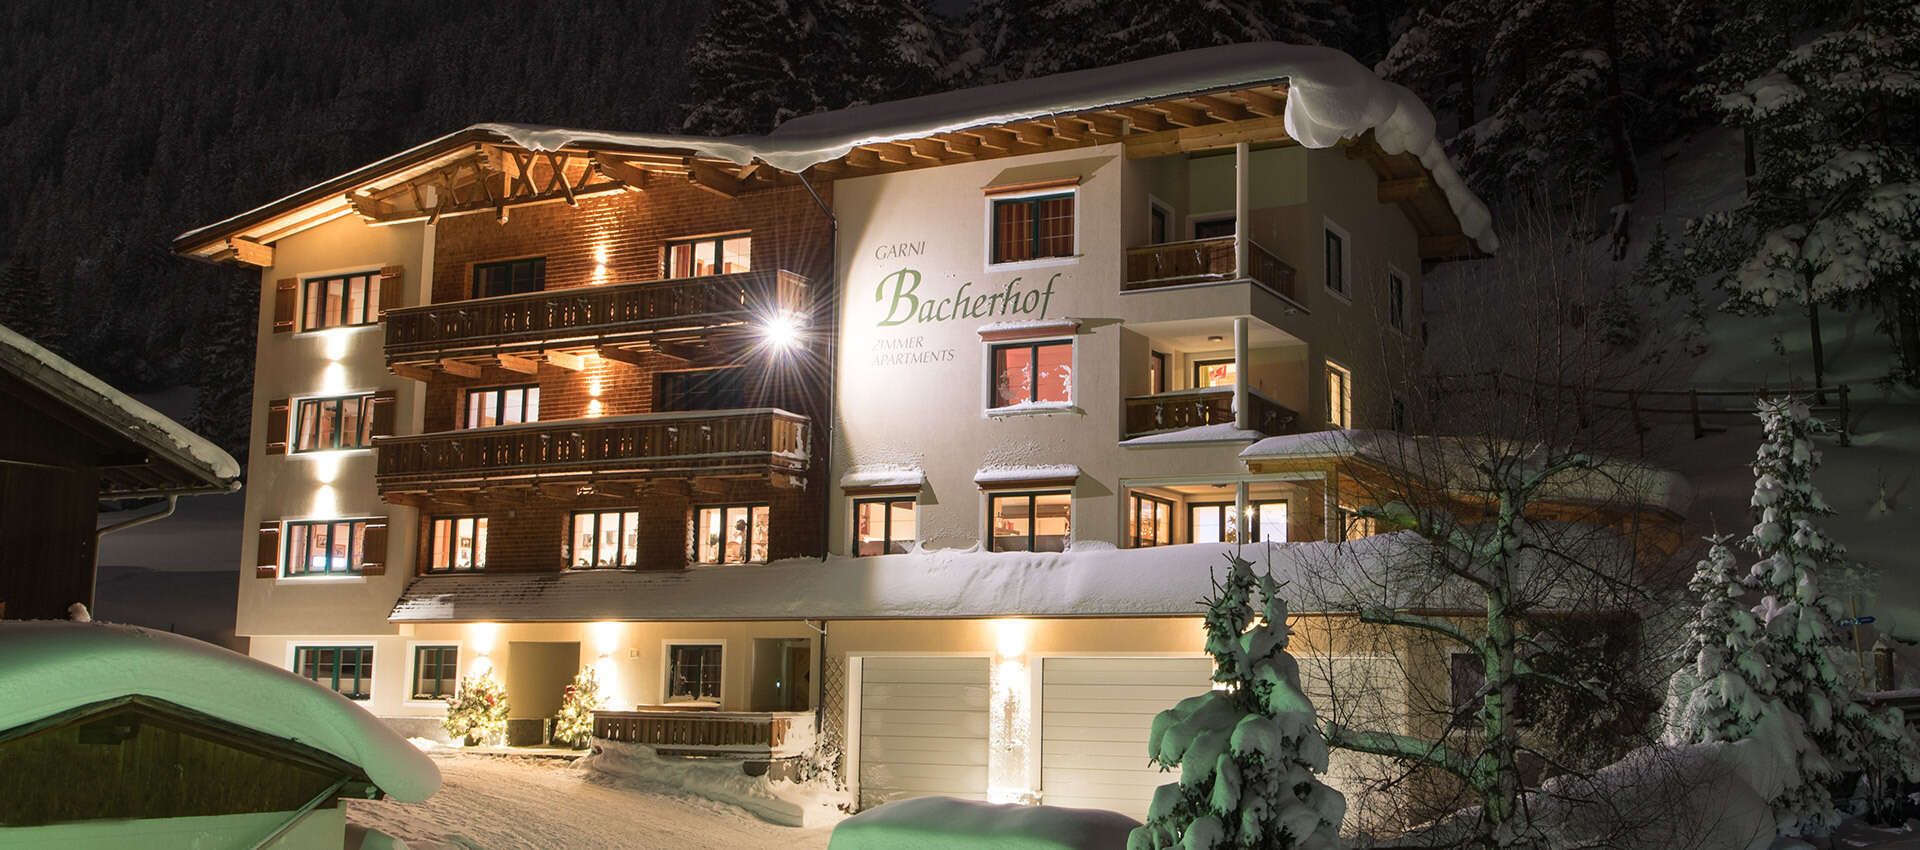 Hotel Garni Bacherhof in St Anton - Arlberg